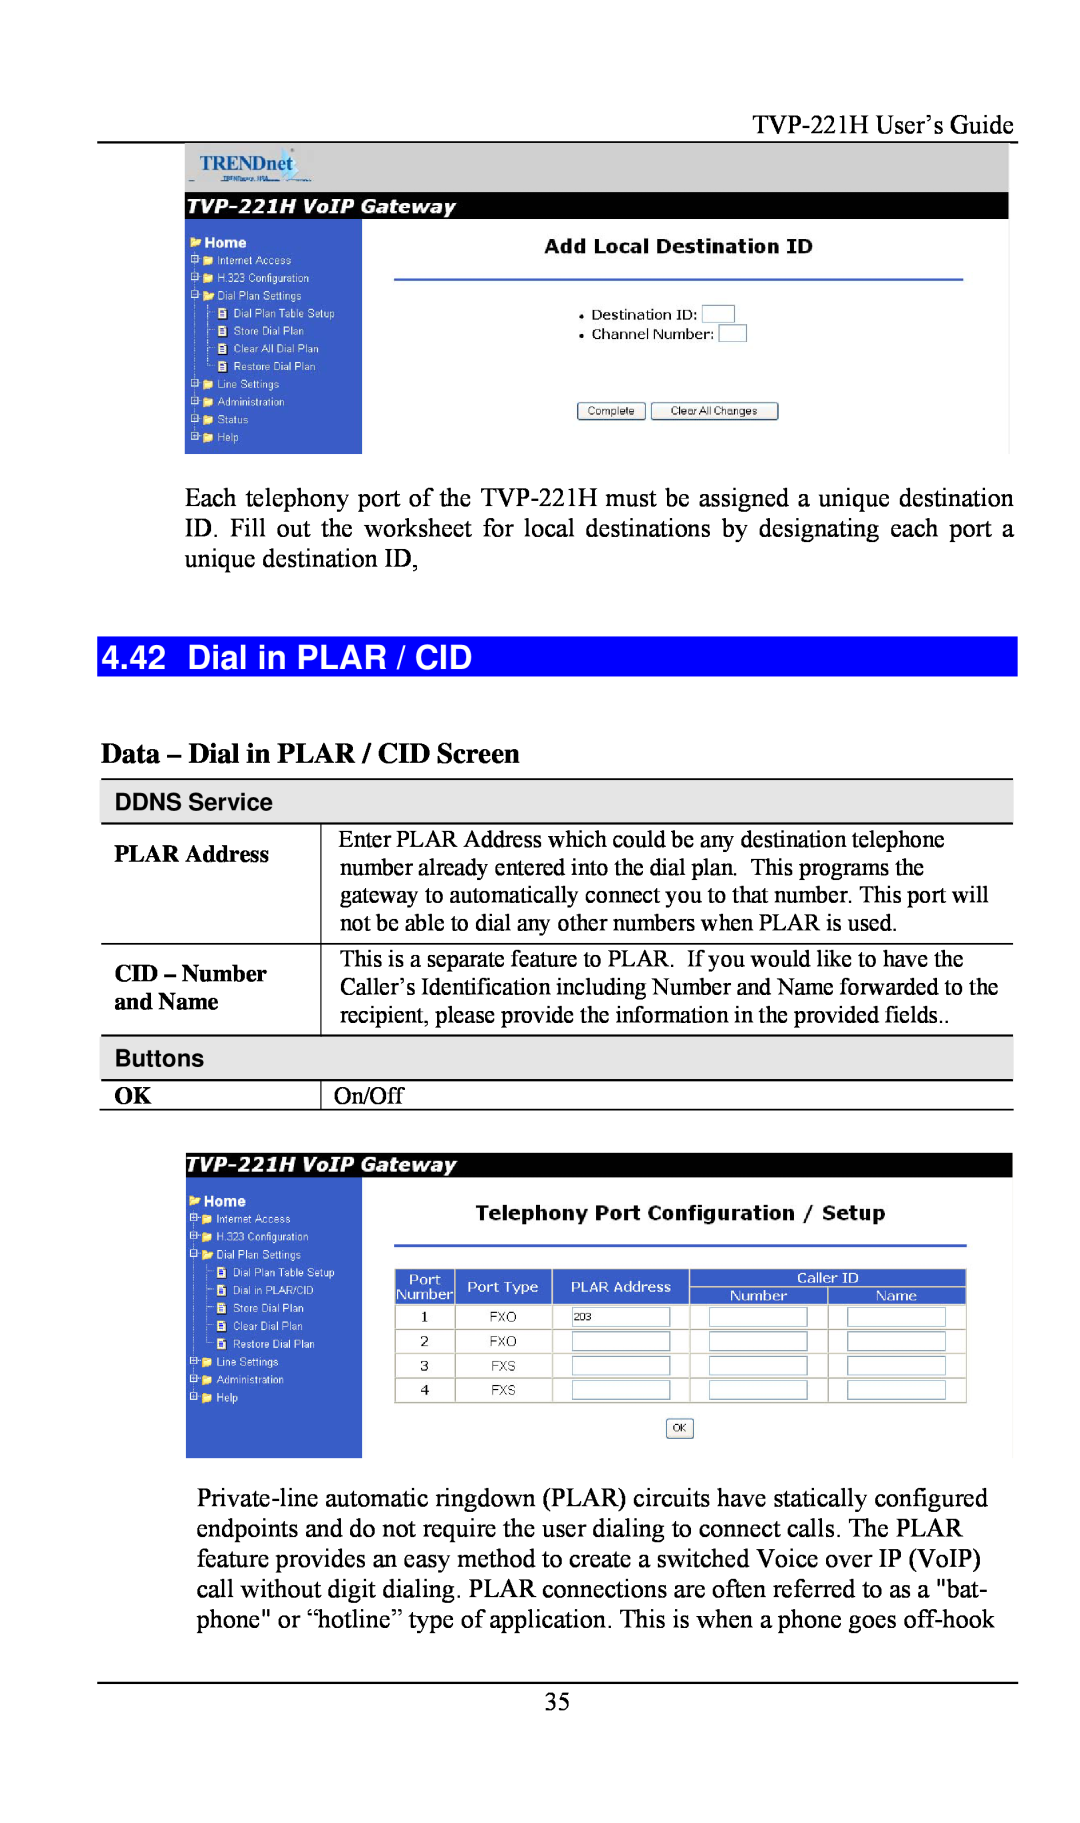 TRENDnet VoIP Gateway, TVP- 221H manual Data - Dial in PLAR / CID Screen 